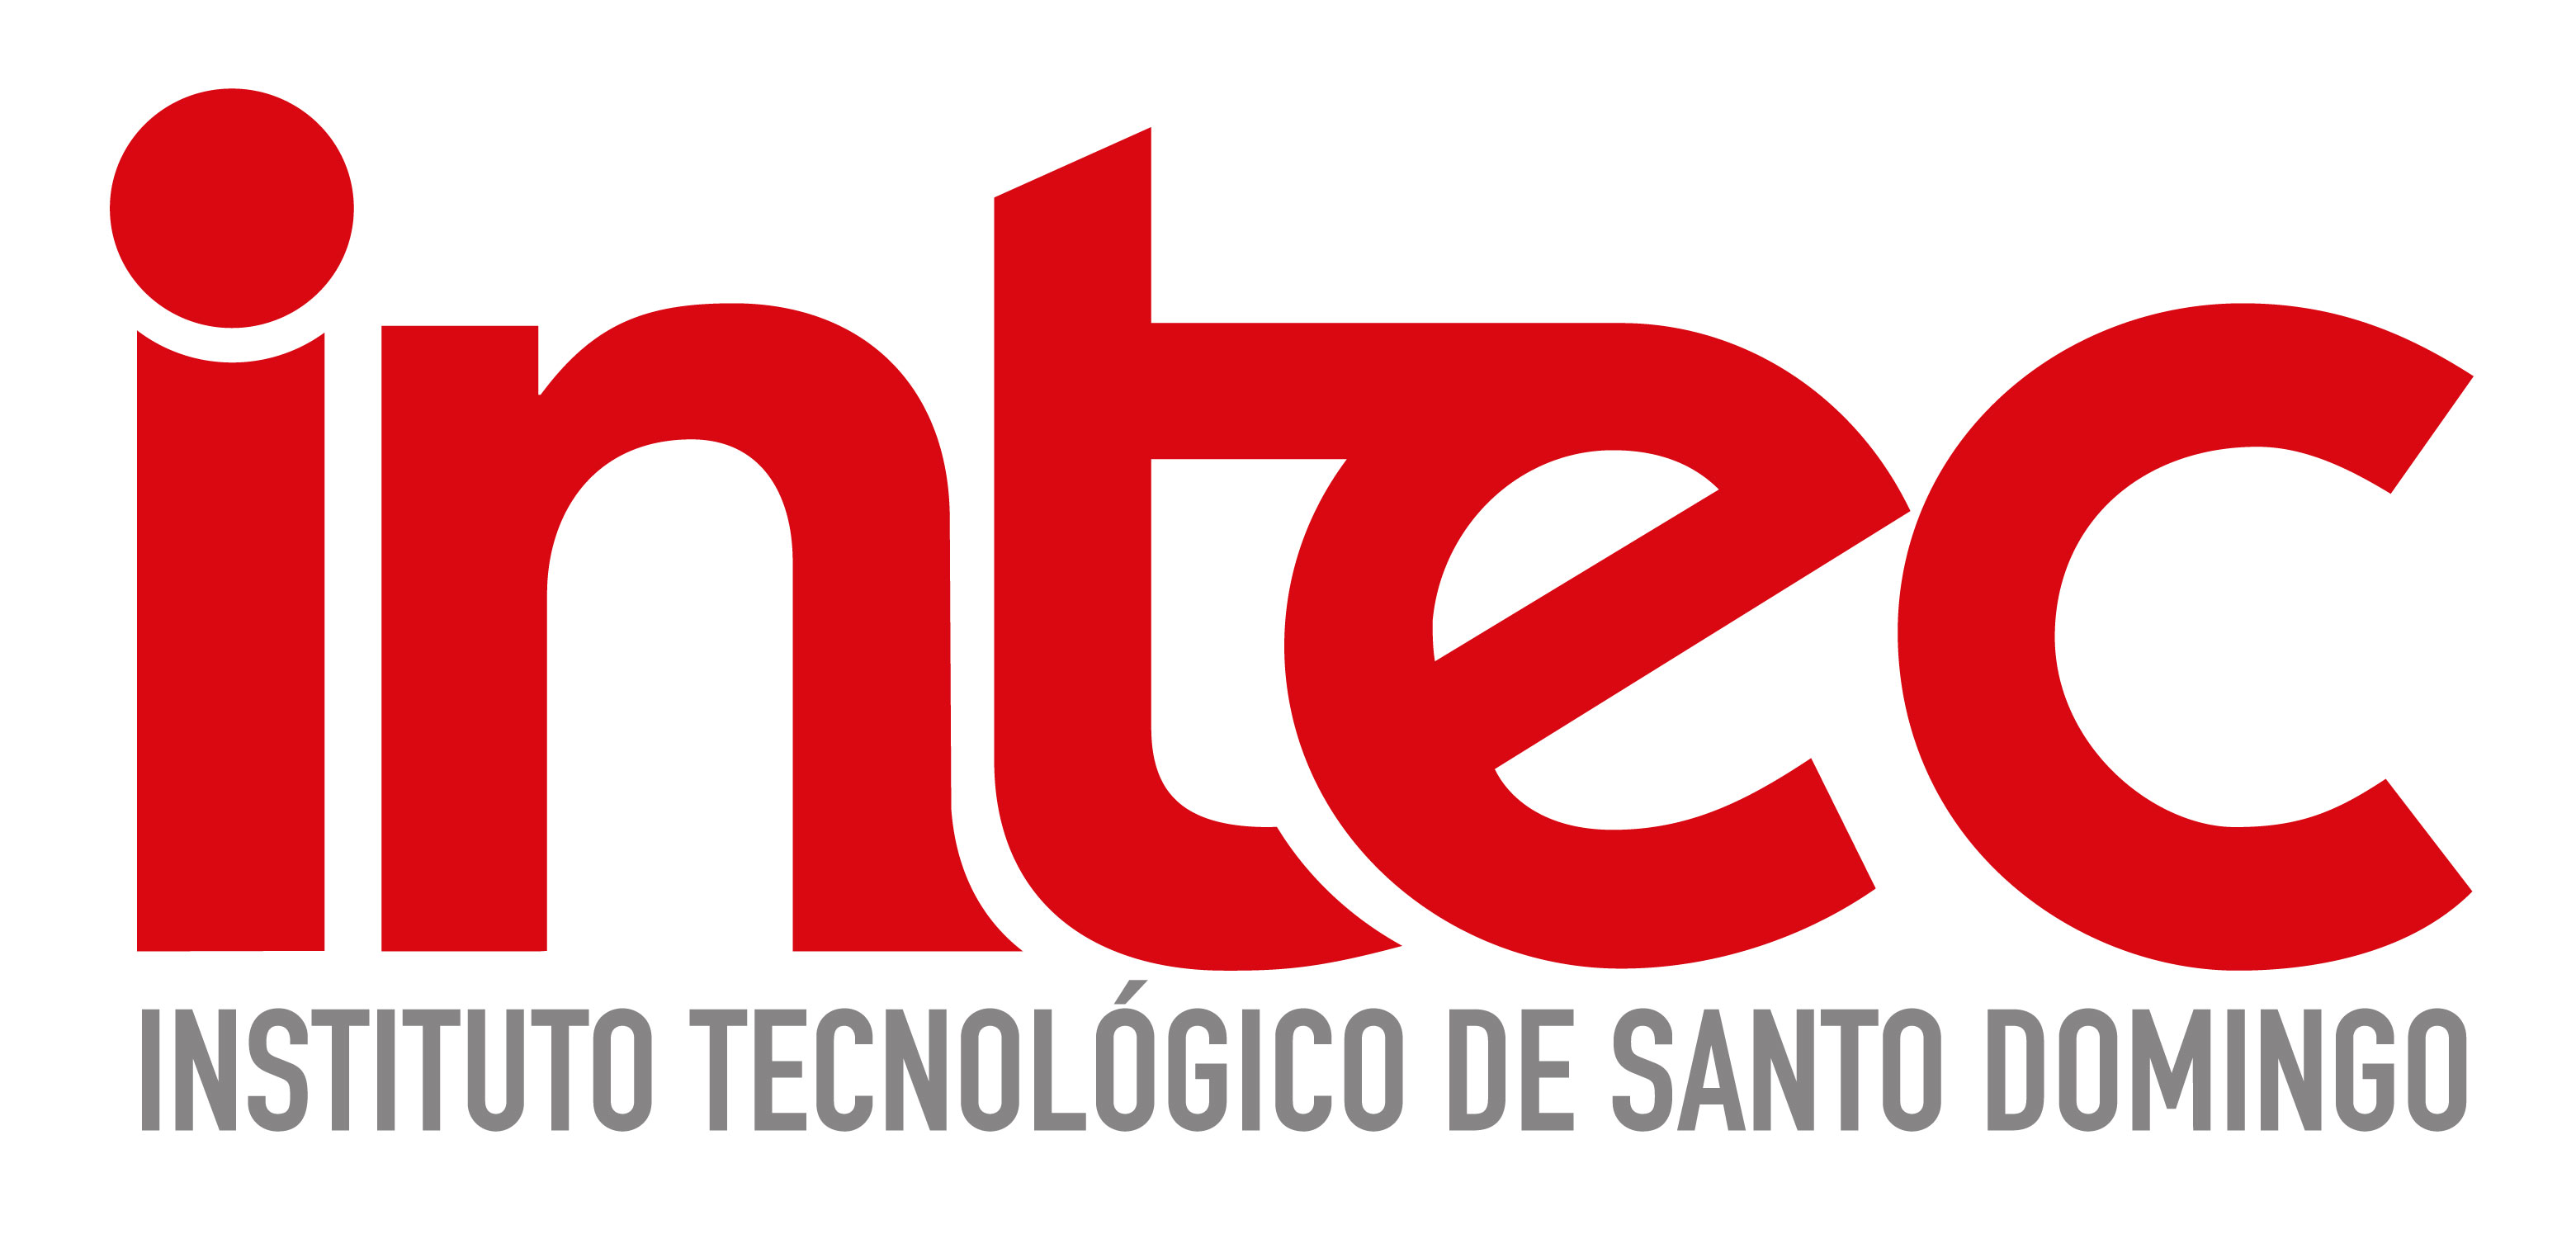 Instituto Tecnologico de Santo Domingo (INTEC) logo graphic